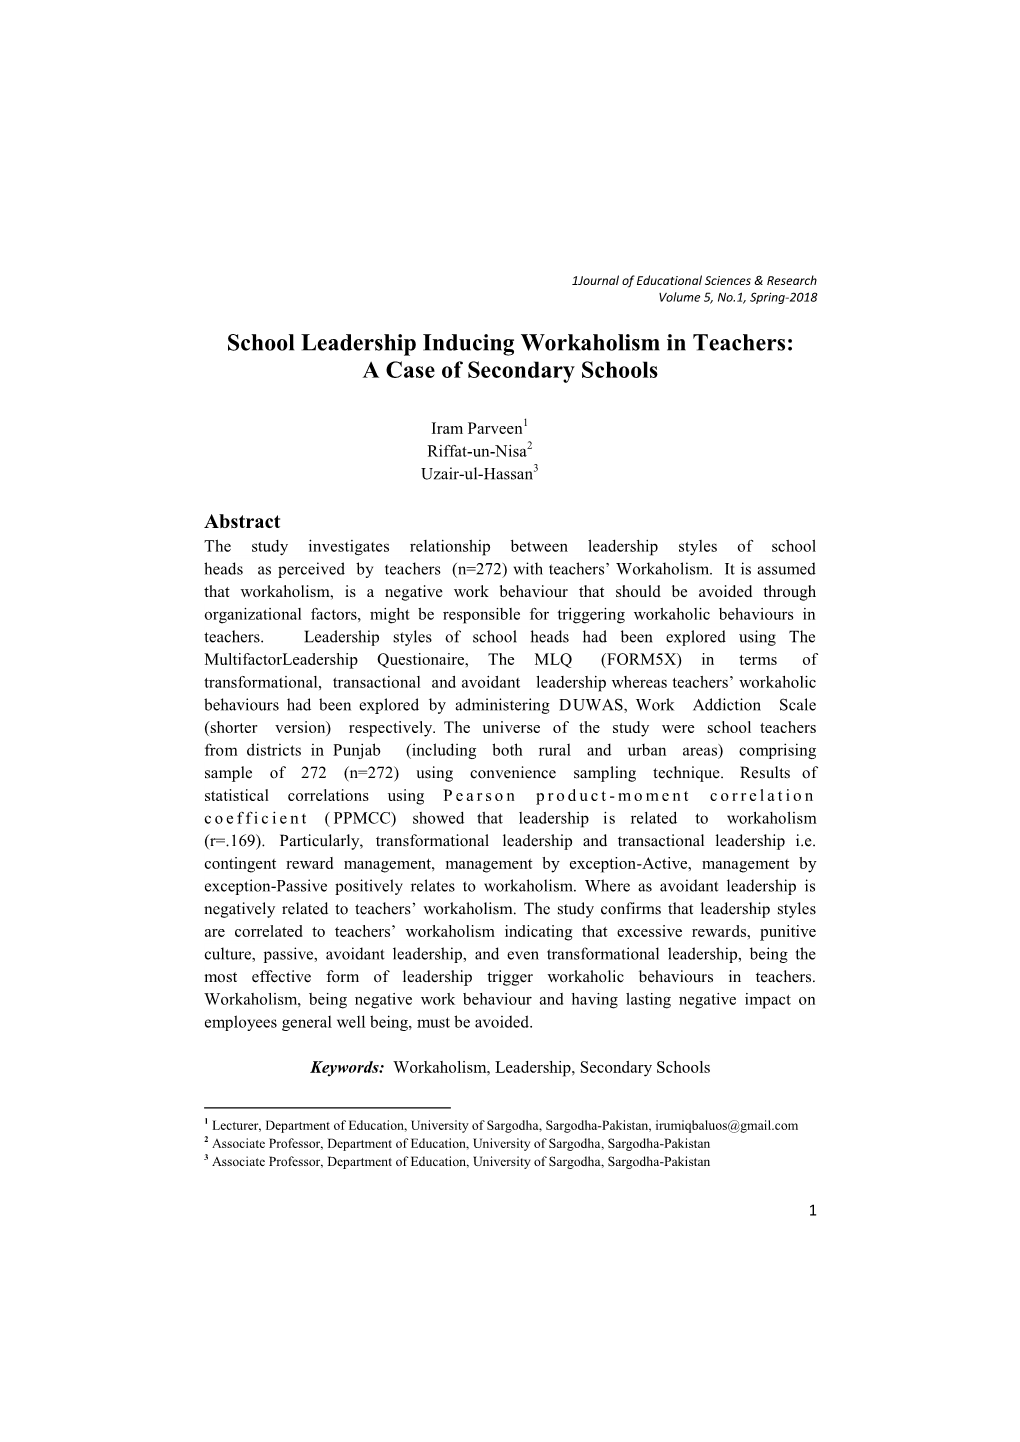 School Leadership Inducing Workaholism in Teachers: a Case of Secondary Schools